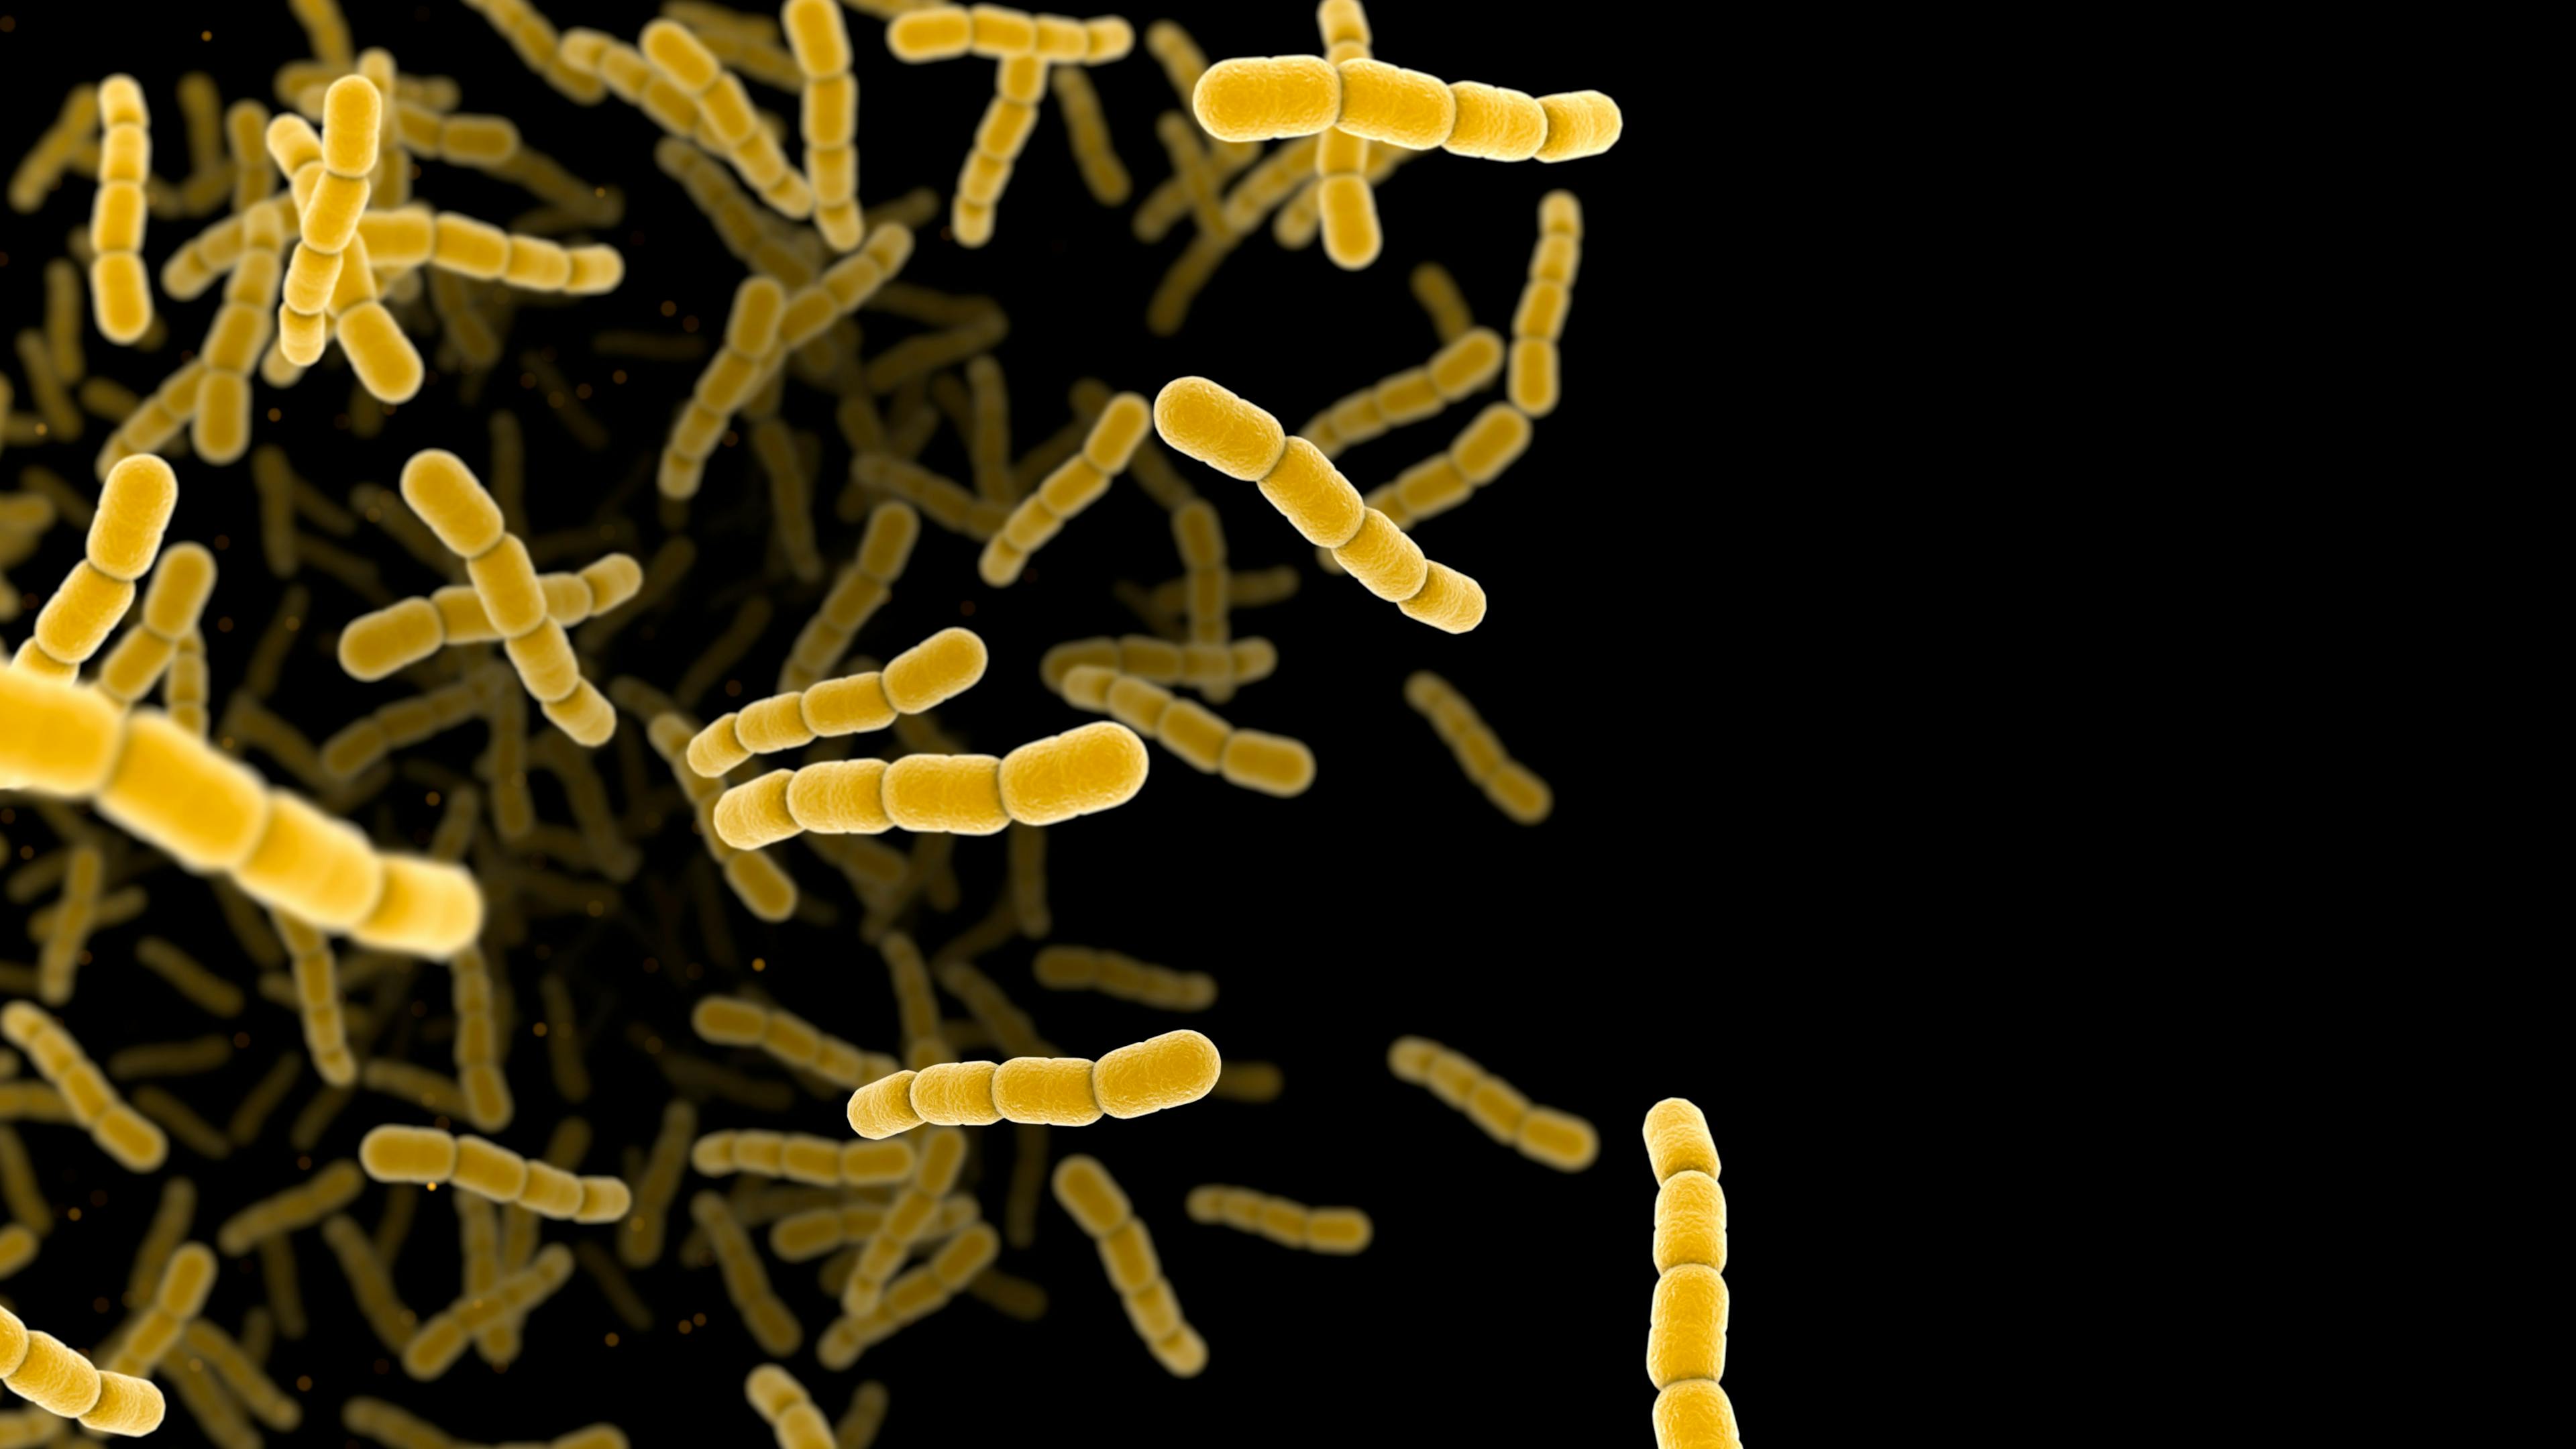 Streptococcus pneumonia bacteria cells. | Image Credit: Jezper - stock.adobe.com